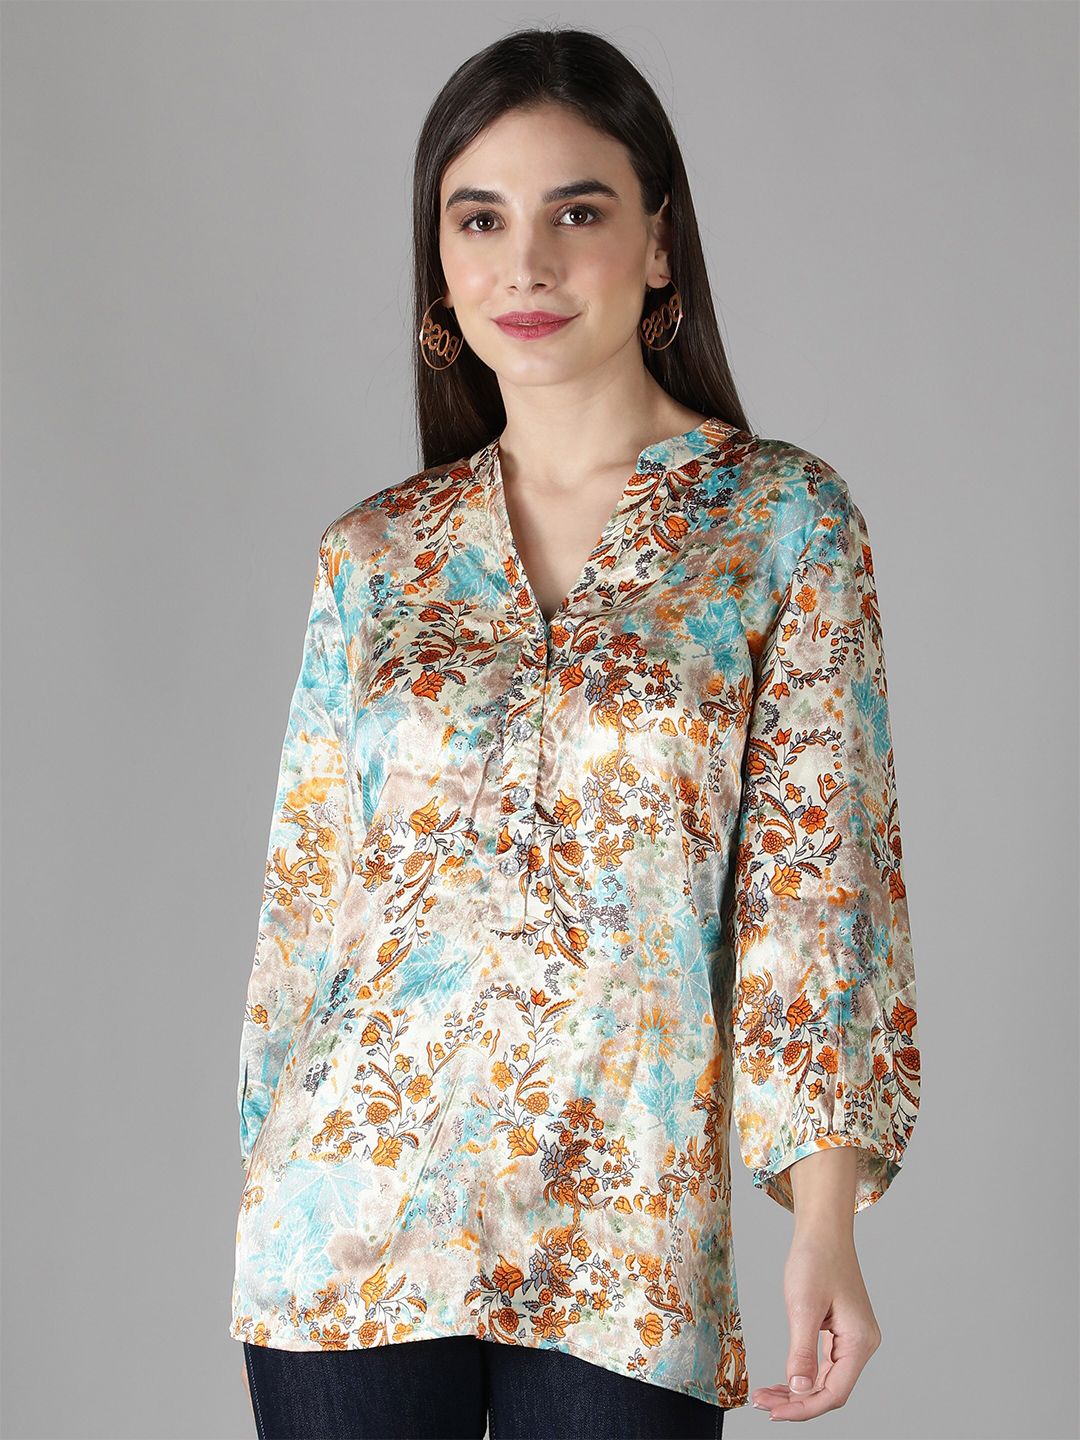 DEBONATELLA Gold-Toned Floral Print Mandarin Collar Satin Shirt Style Top Price in India